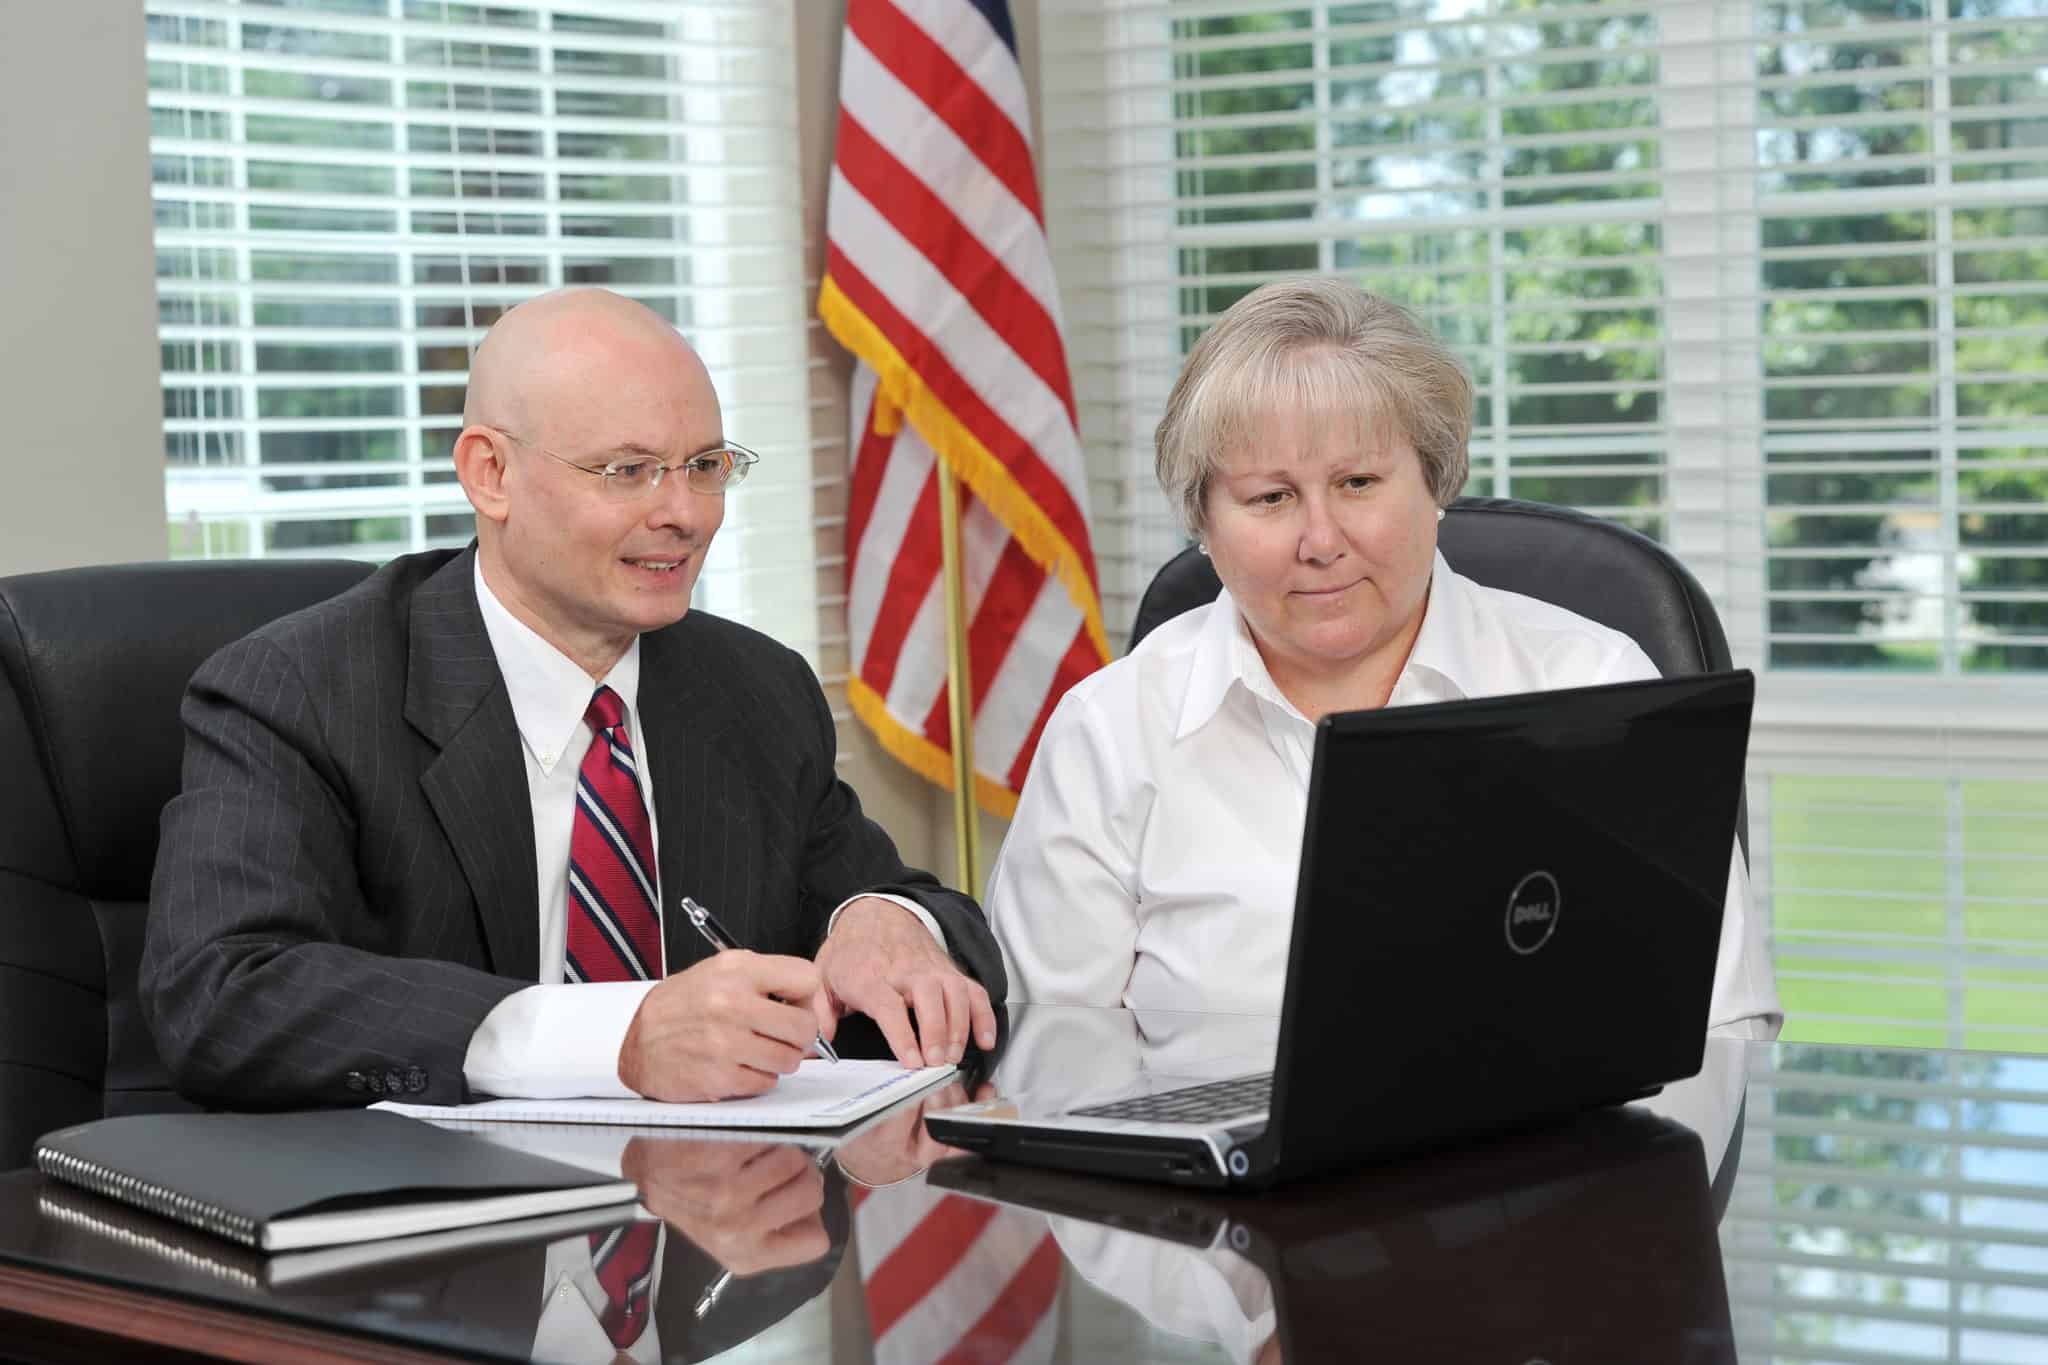 tom dunn and woman on computer together